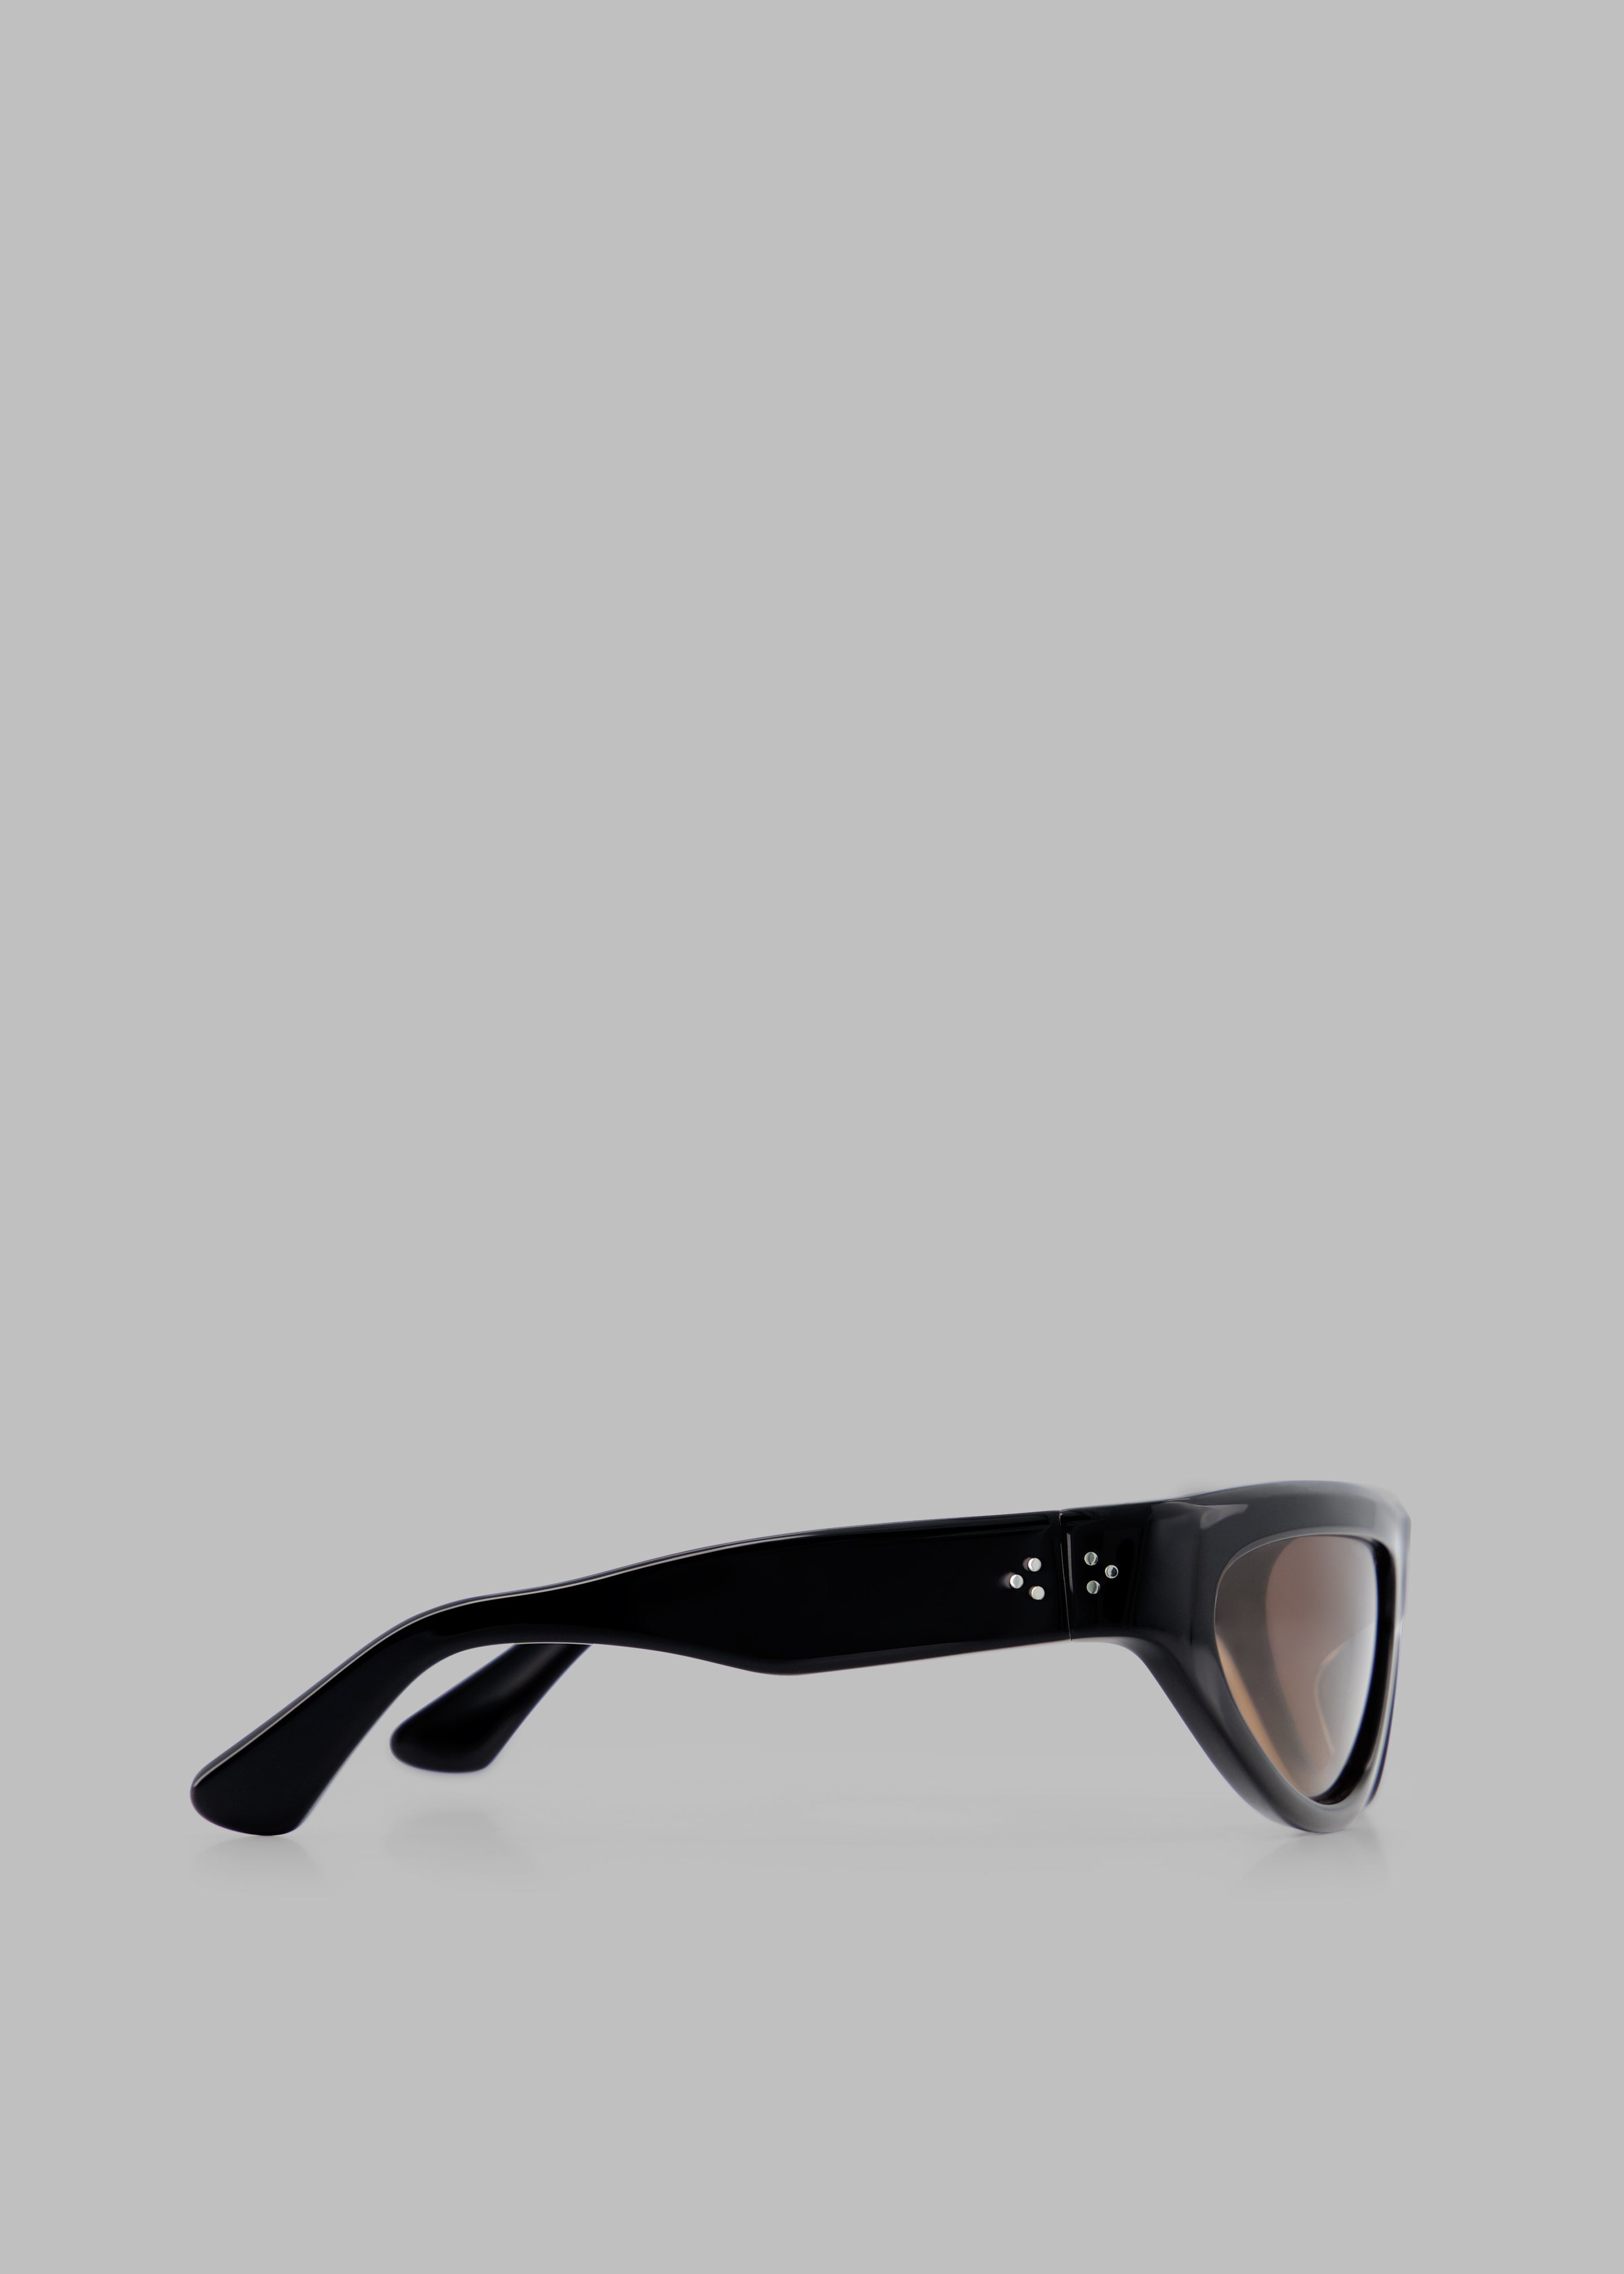 Port Tanger Malick Sunglasses - Black Acetate/Tobacco Lens - 5